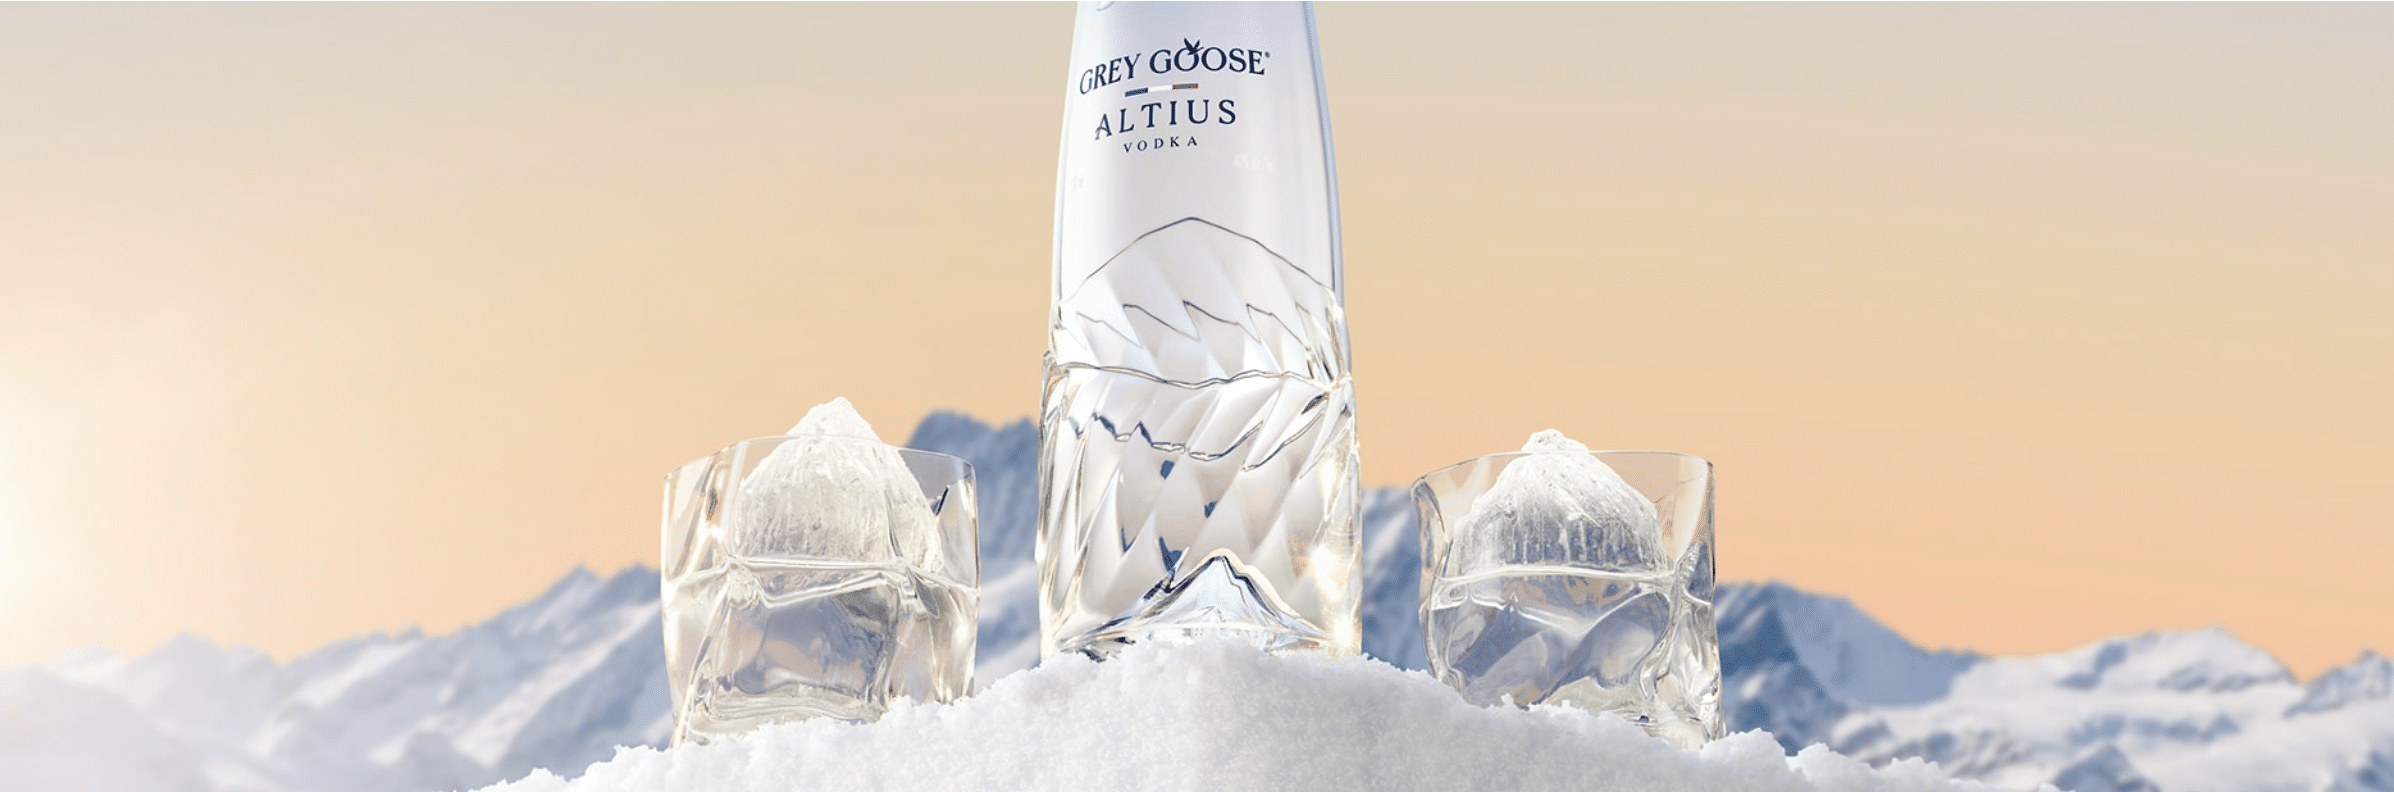 Grey Goose® Altius: Elevating Vodka to Artisanal Heights